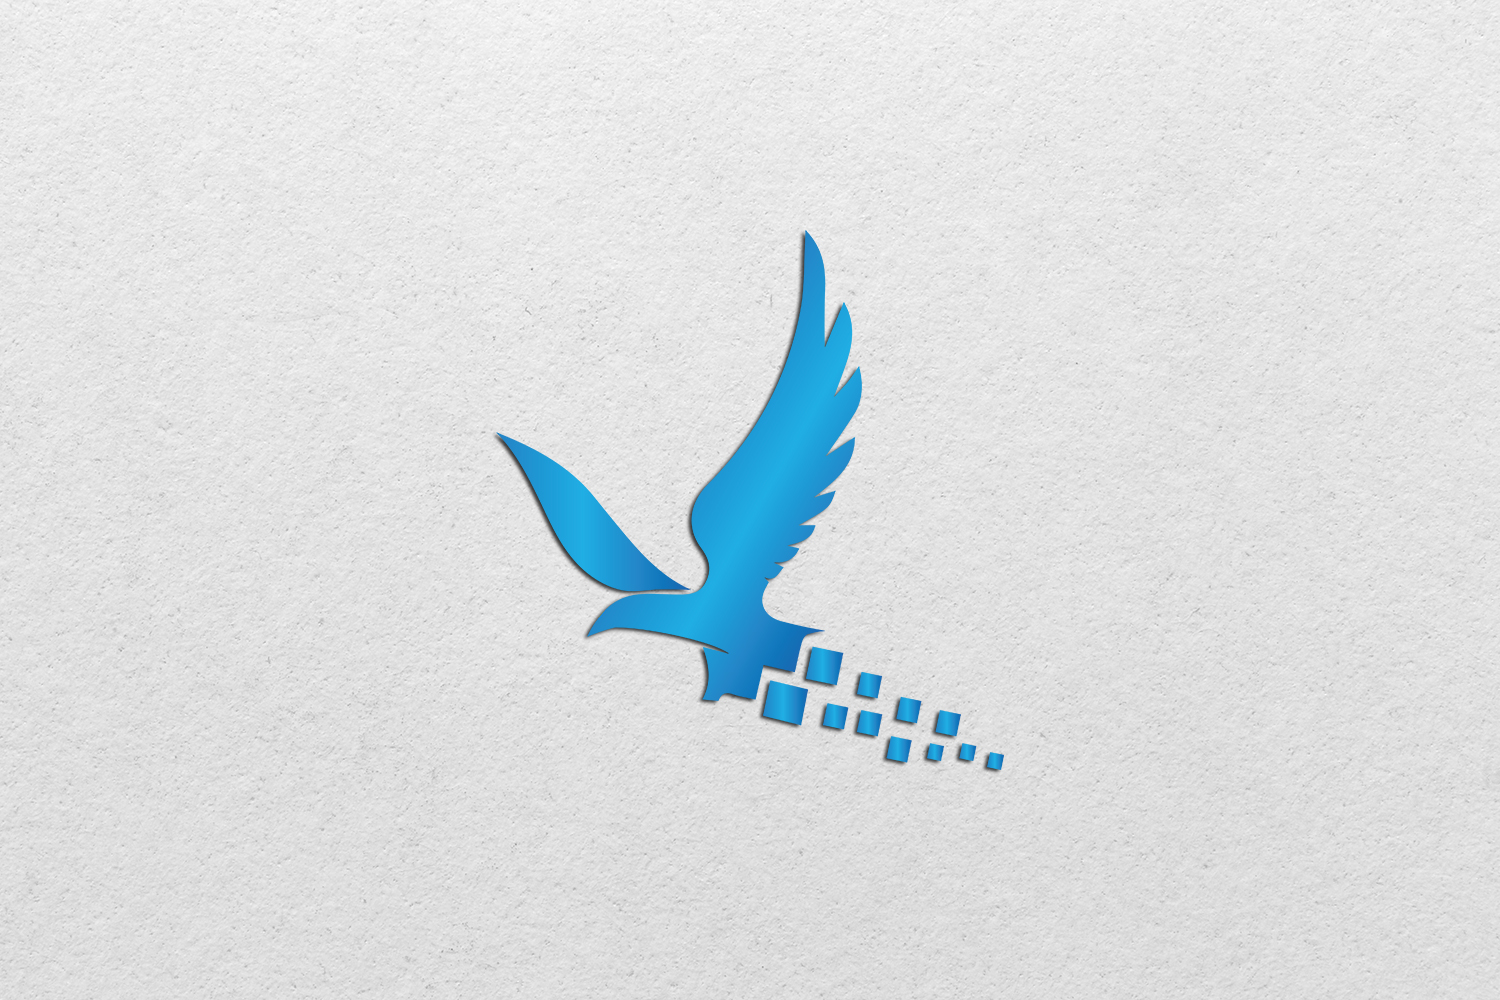 Simple Eagle Logo Design Template